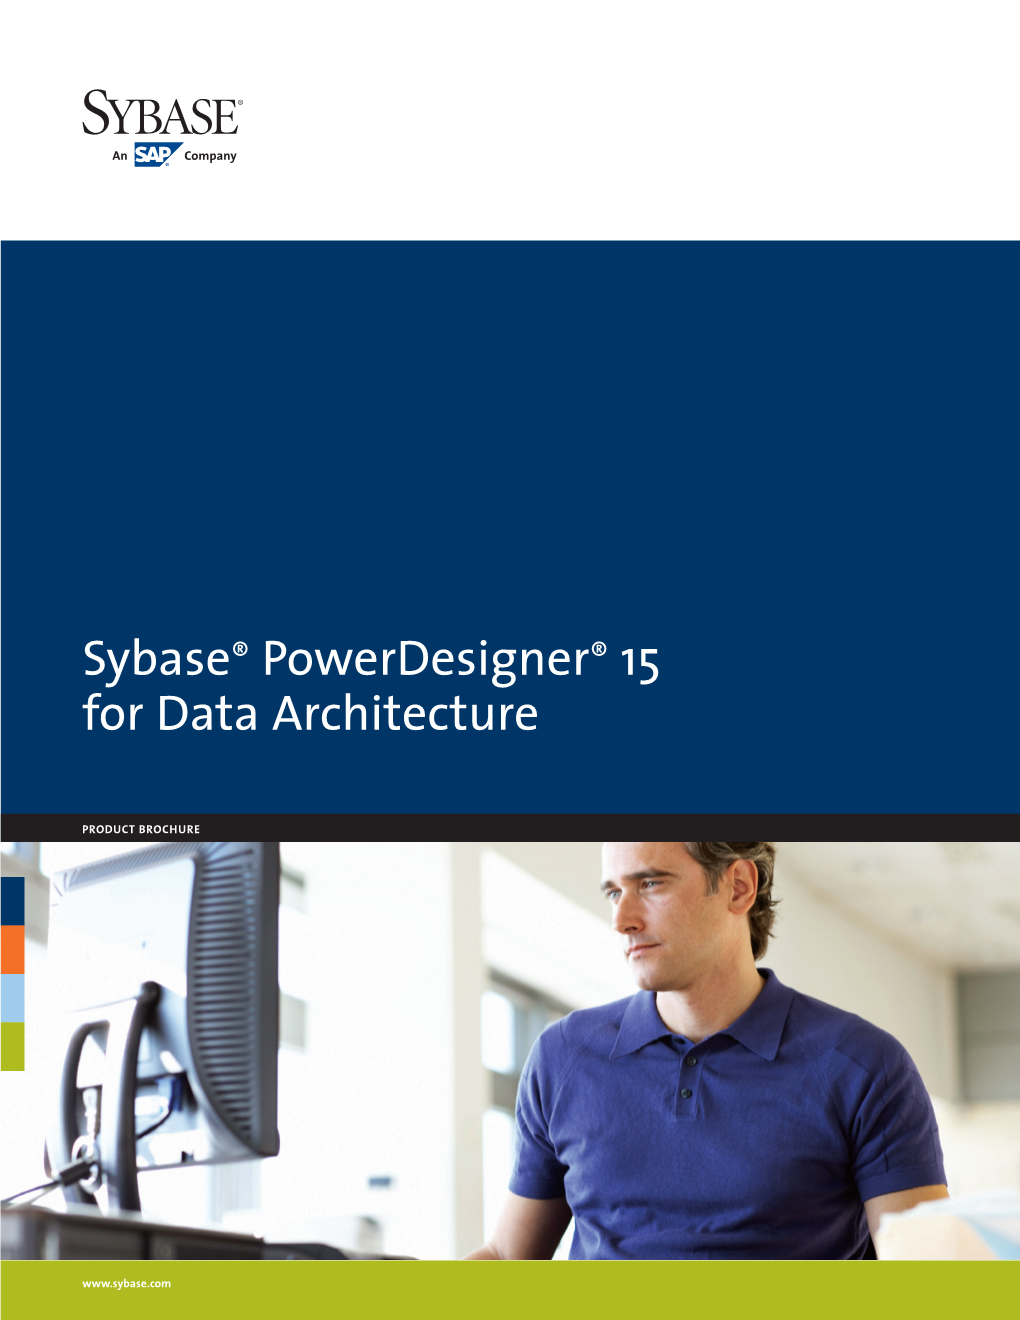 Sybase Powerdesigner 15 for Data Architecture Datasheet